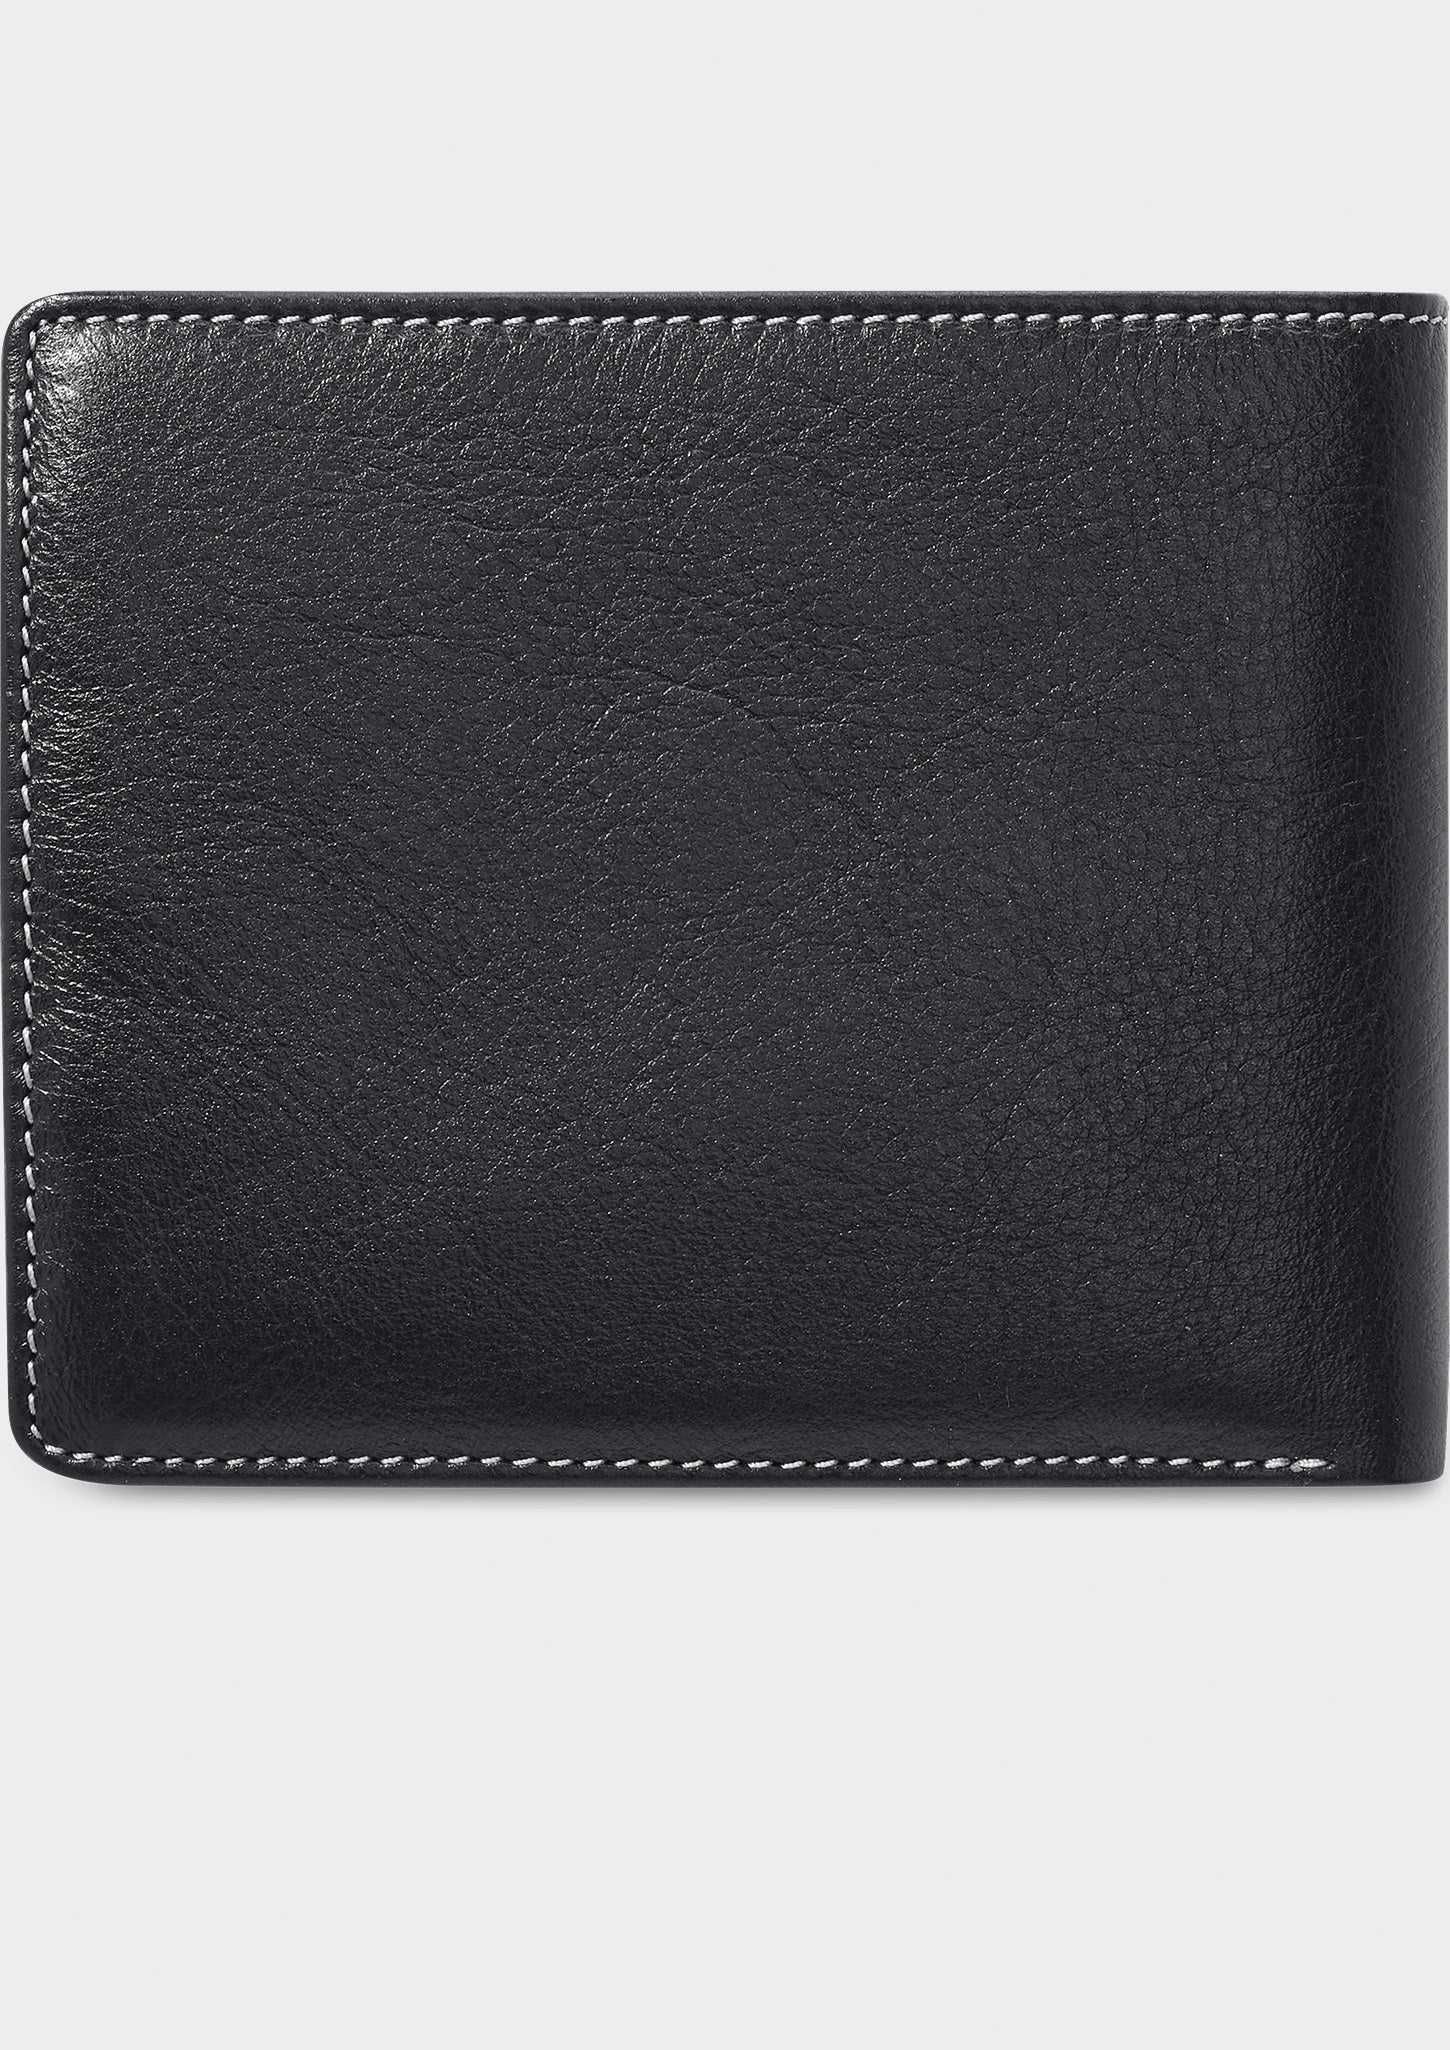 НОВ Немски кожен портфейл PICARD DIEGO Пикард Диего WALLET leather